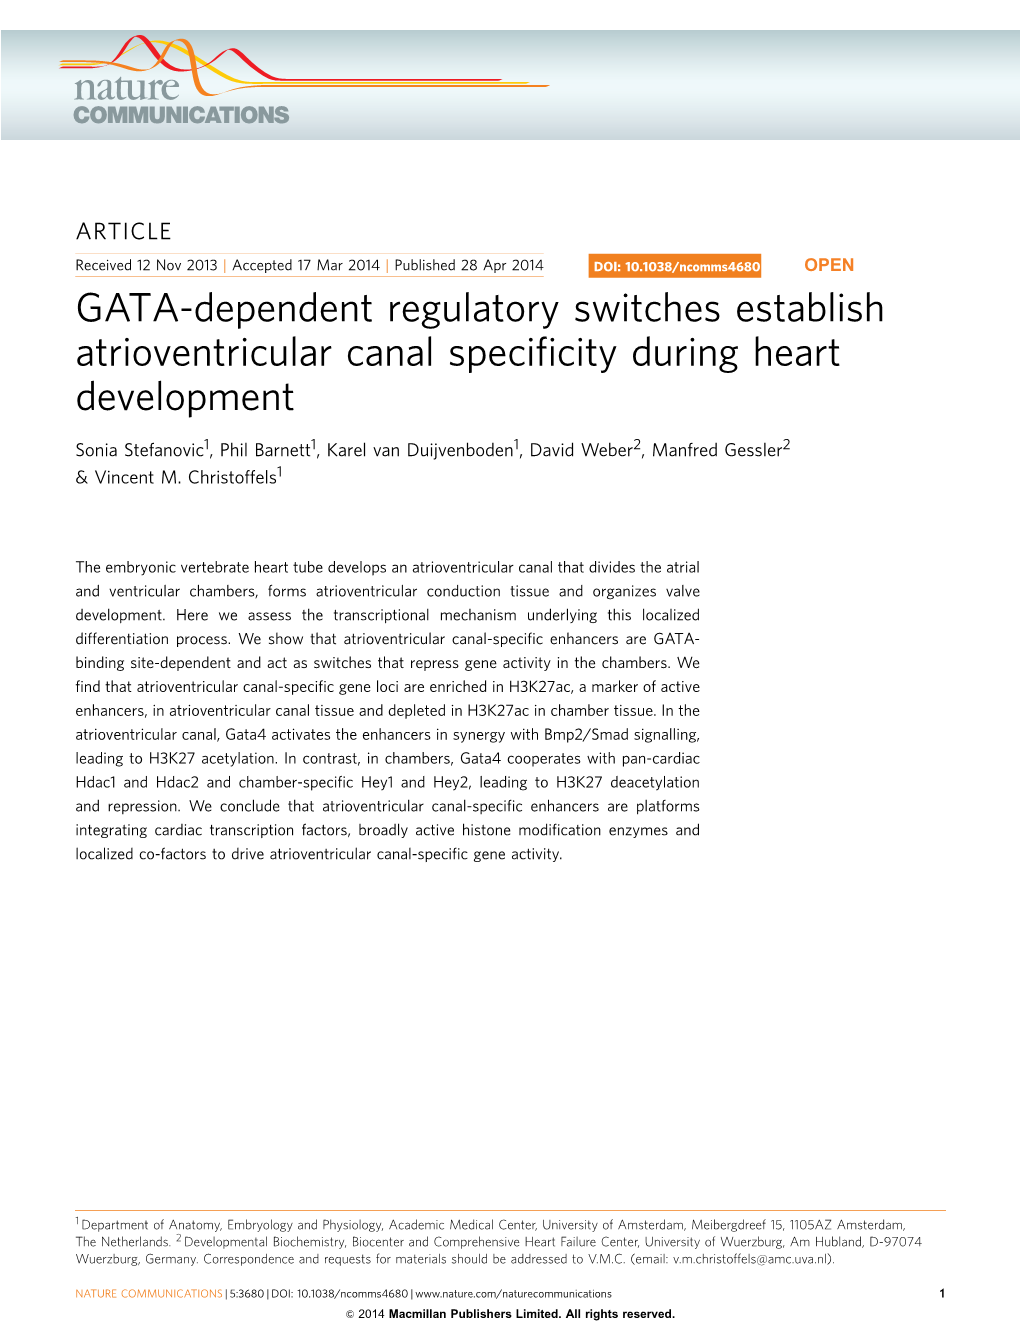 GATA-Dependent Regulatory Switches Establish Atrioventricular Canal Specificity During Heart Development